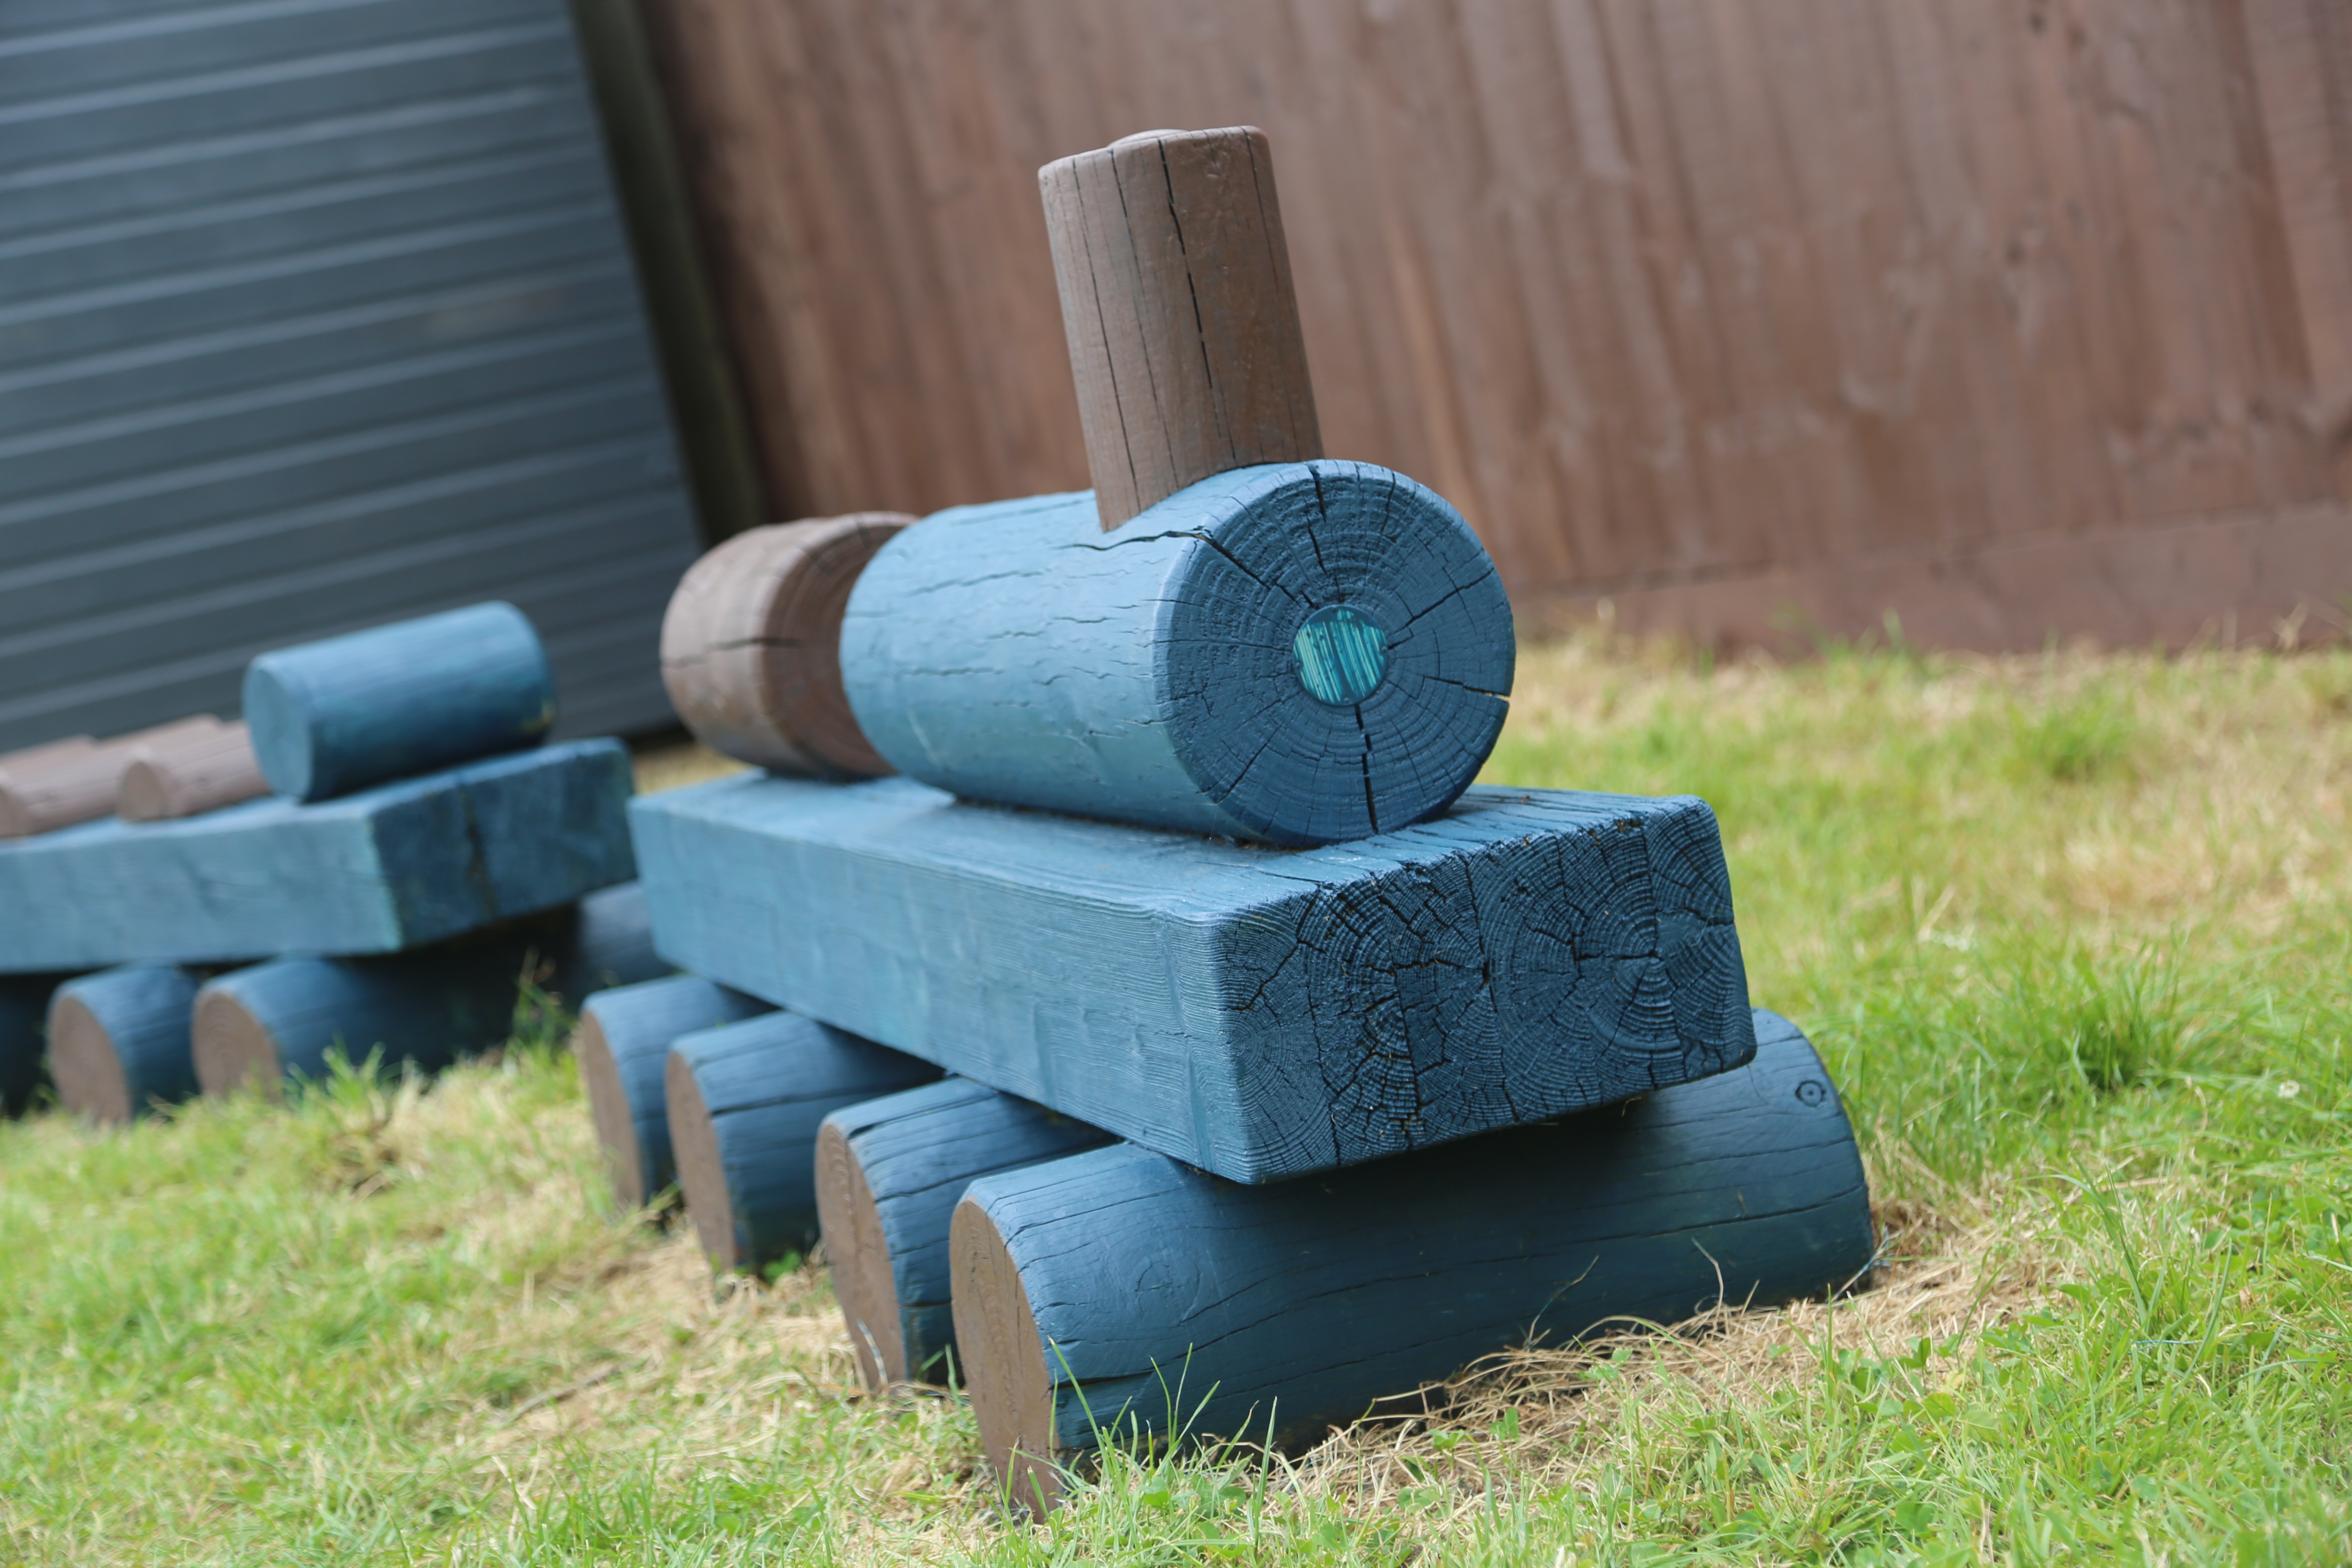 Restored wooden outside toy train